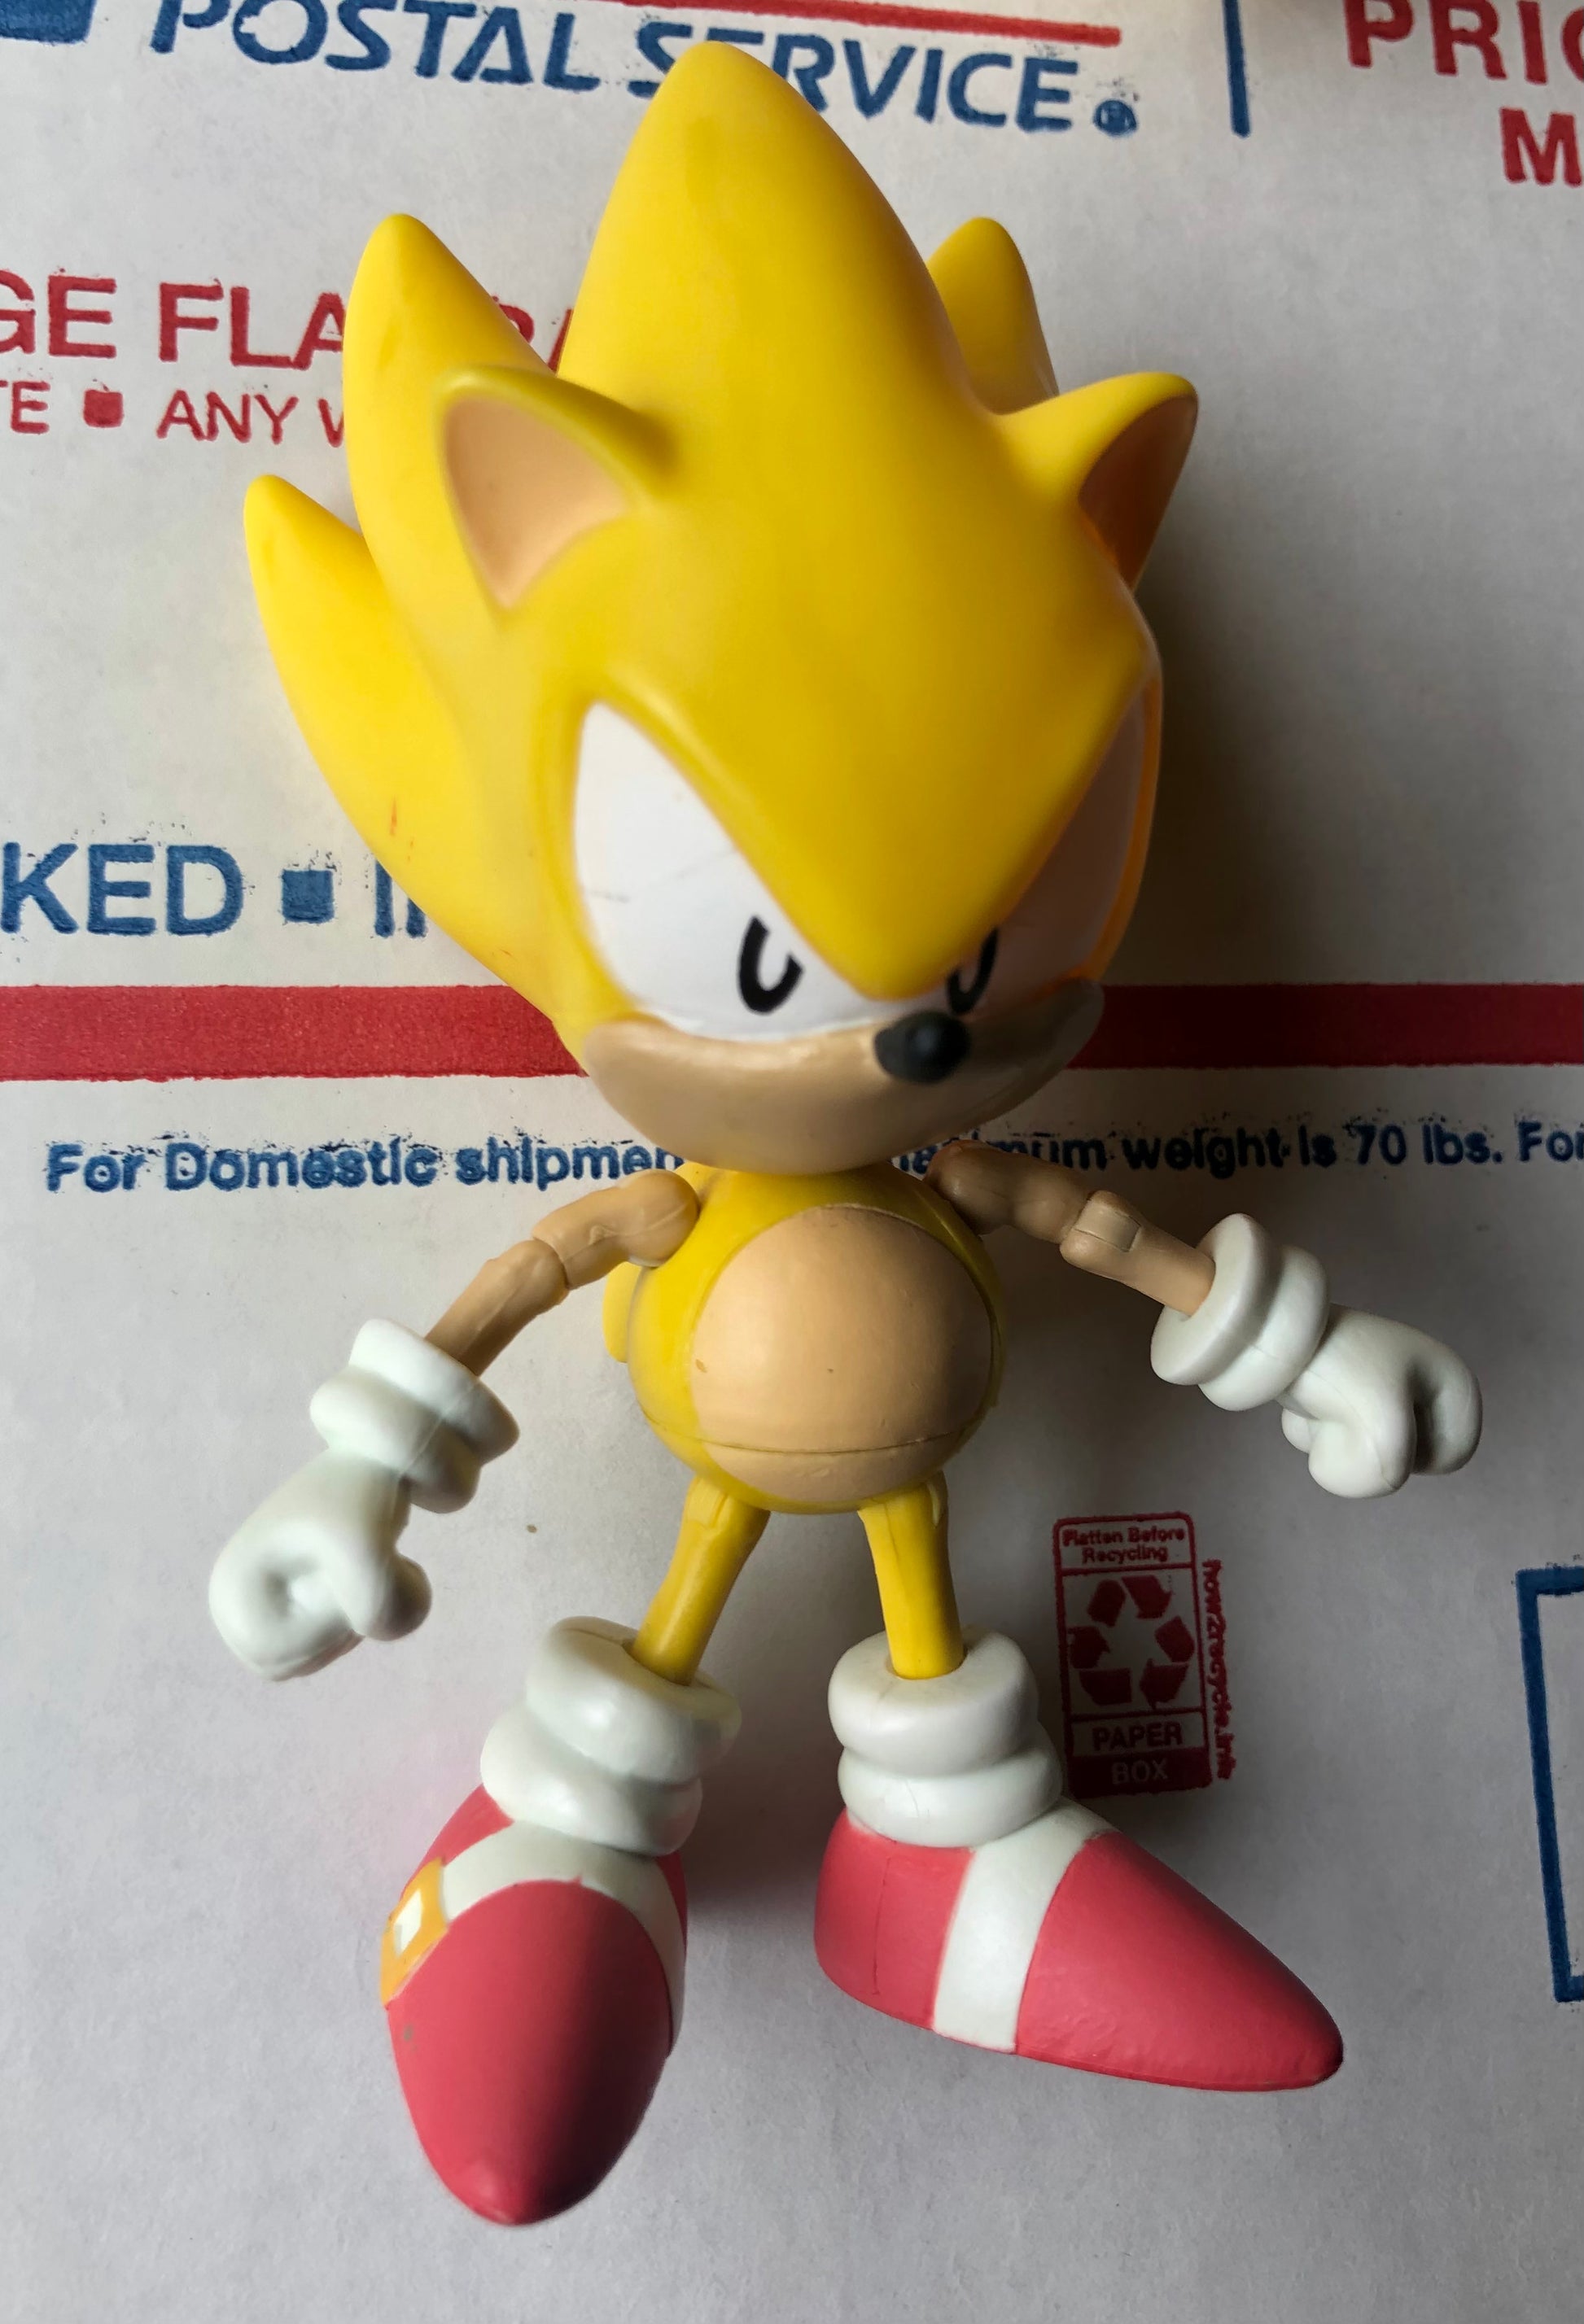 Sonic the Hedgehog Super Sonic action figure